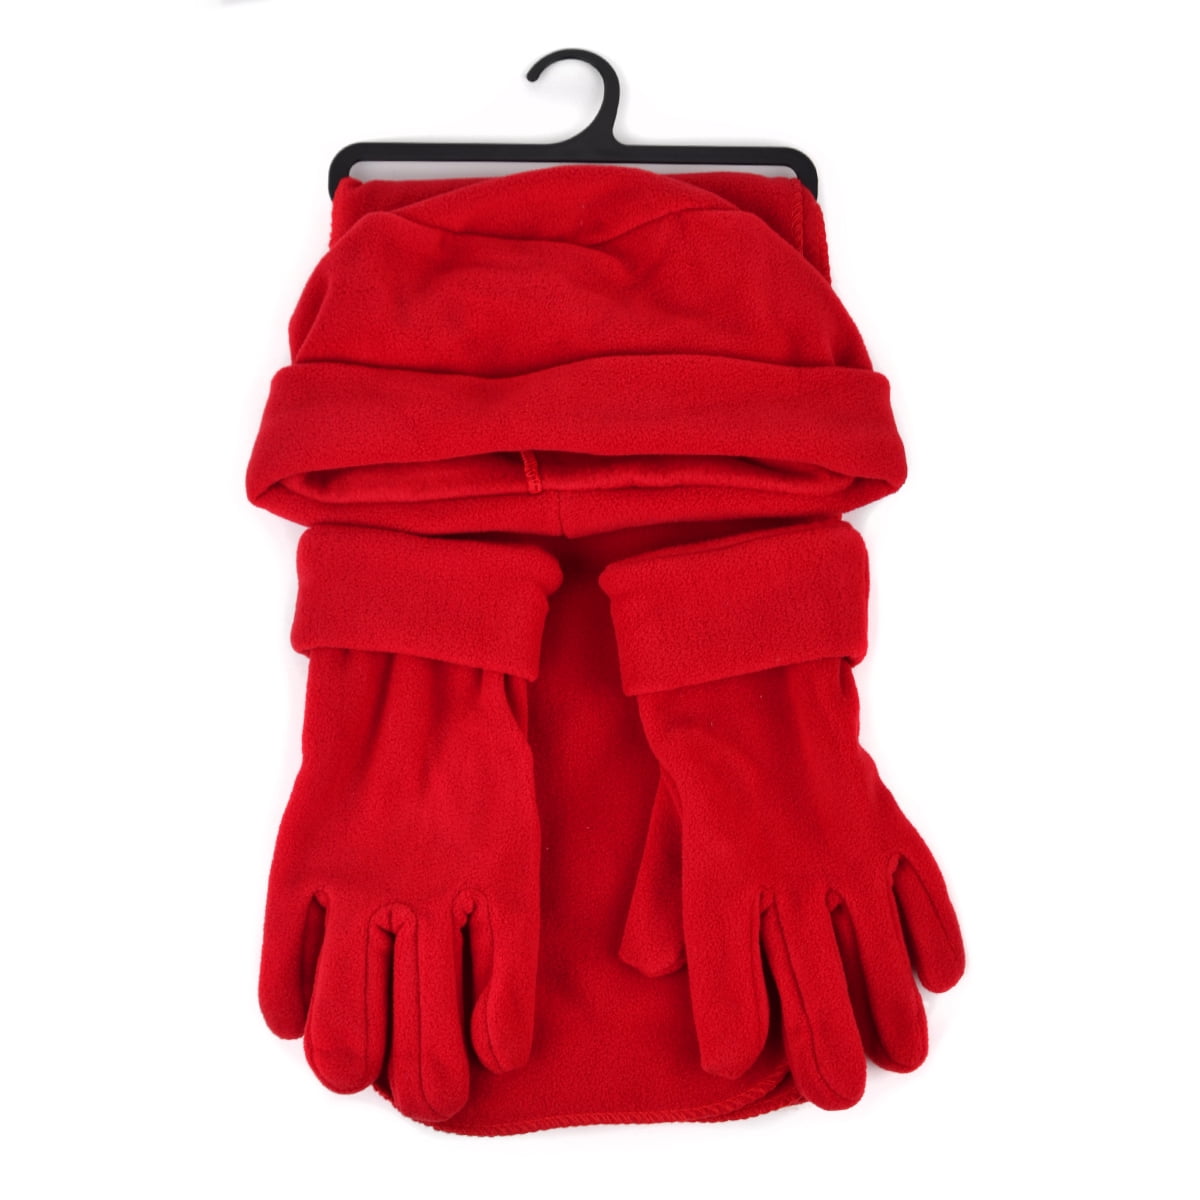 Women's Warm Fleece Winter Set - Scarf, Hat, and Gloves Set